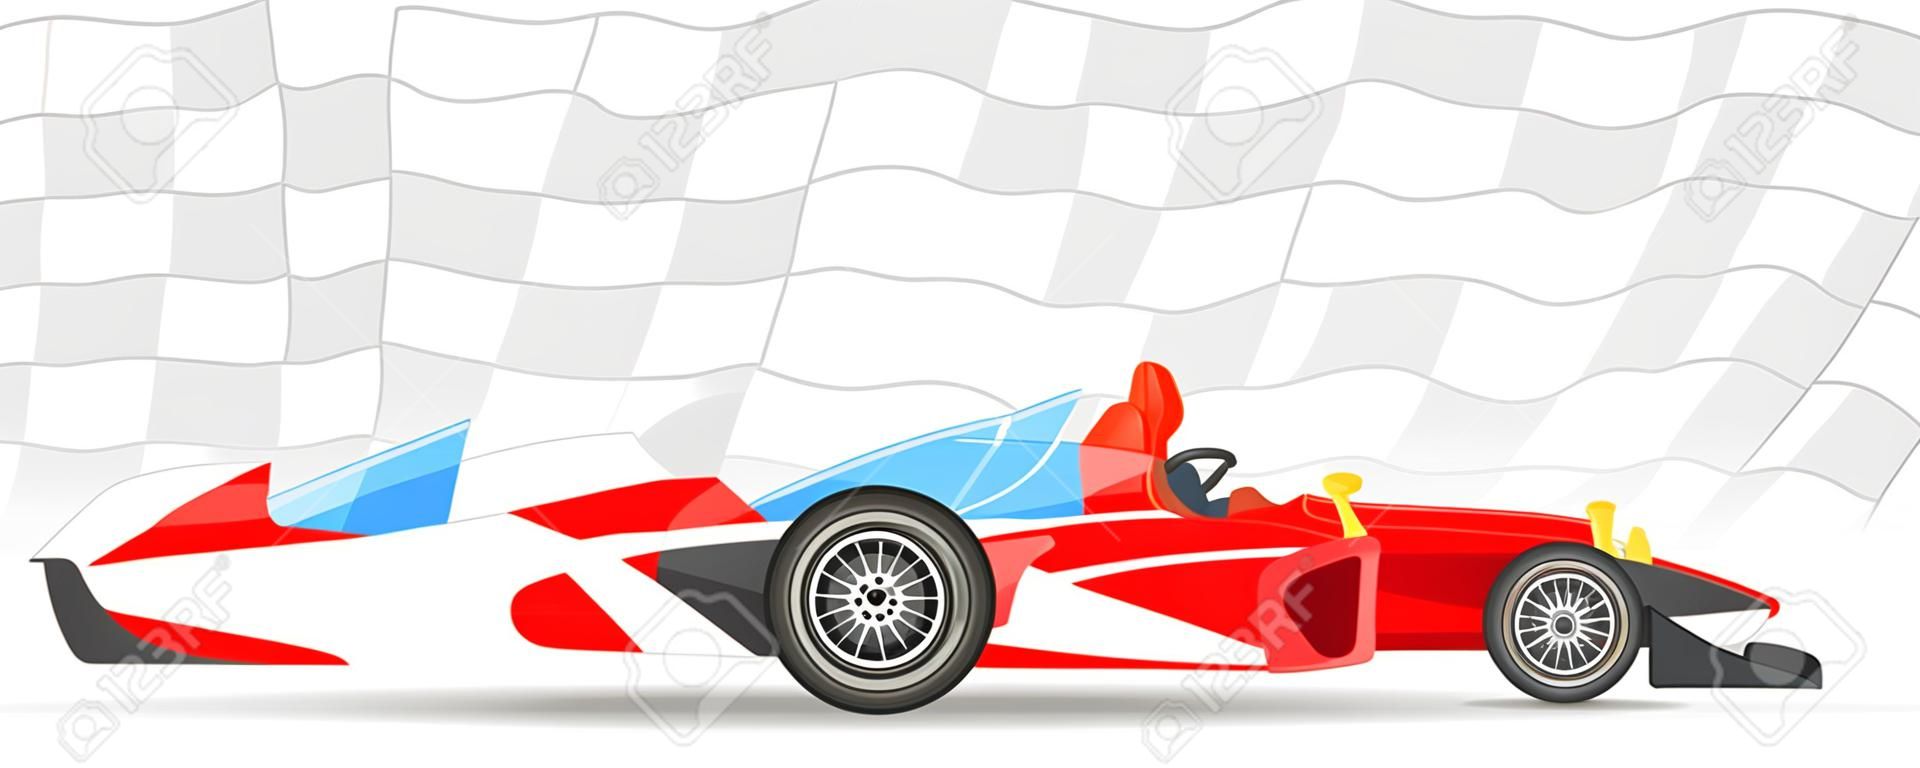 Rode race auto zijaanzicht op sport finish vlag achtergrond. Vector illustratie.